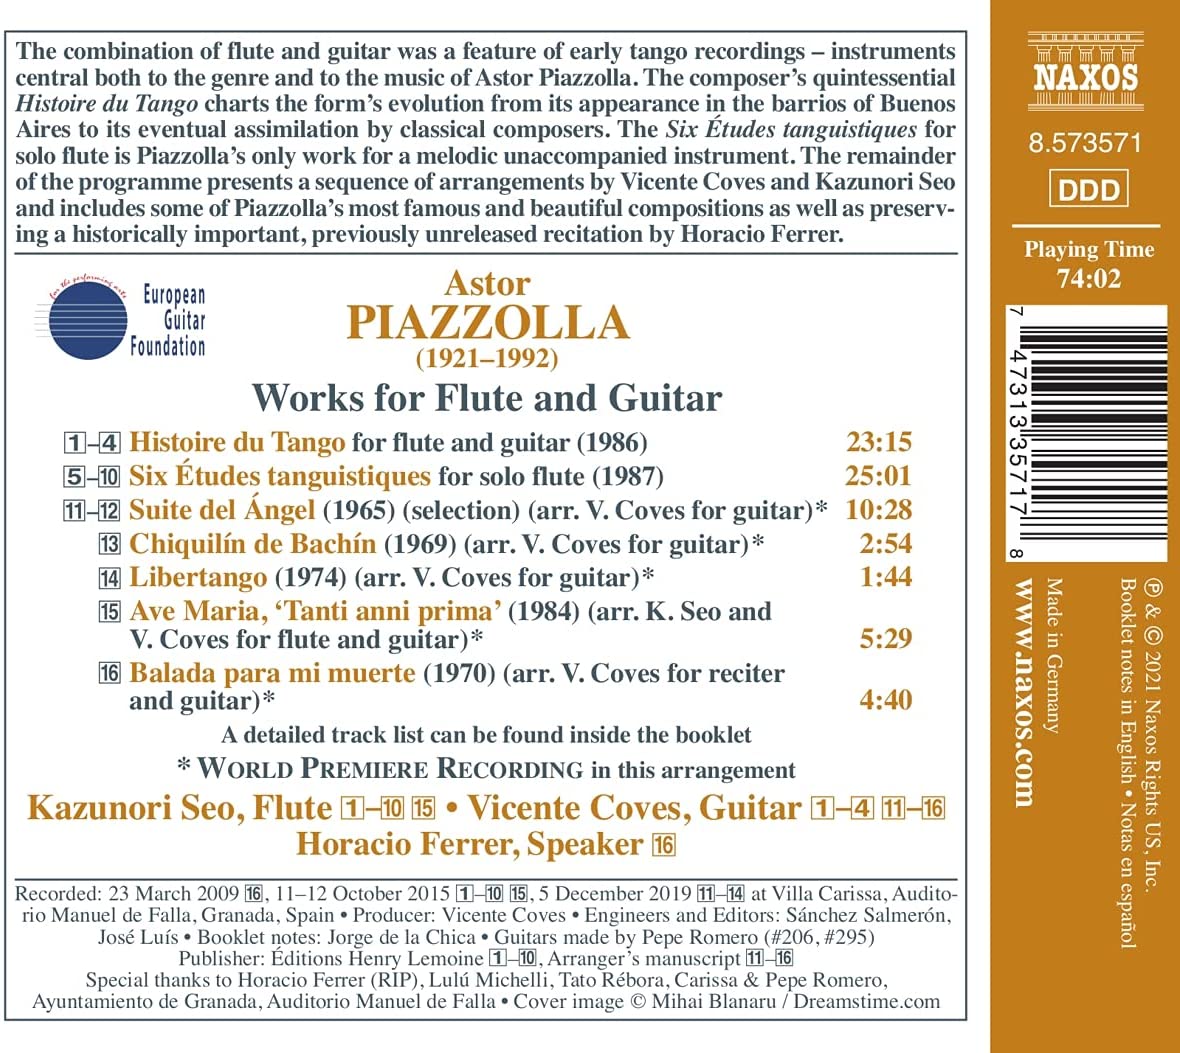 Kazunori Seo 피아졸라: 플루트와 기타를 위한 작품집 (Piazzolla: Works for Flute and Guitar - Histoire du Tango) 